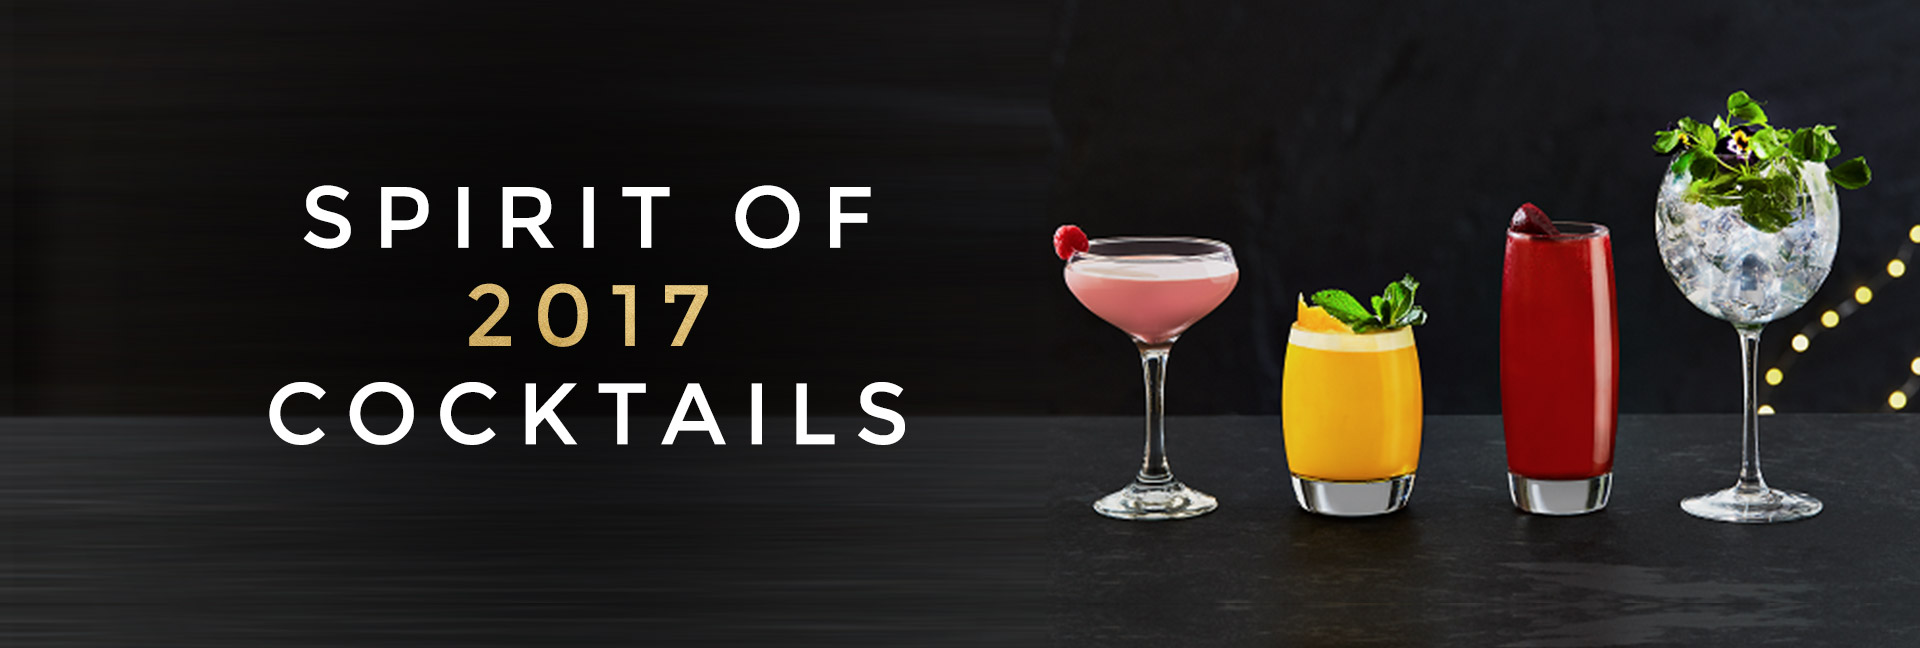 Spirit of 2017 cocktails at All Bar One Greek Street Leeds